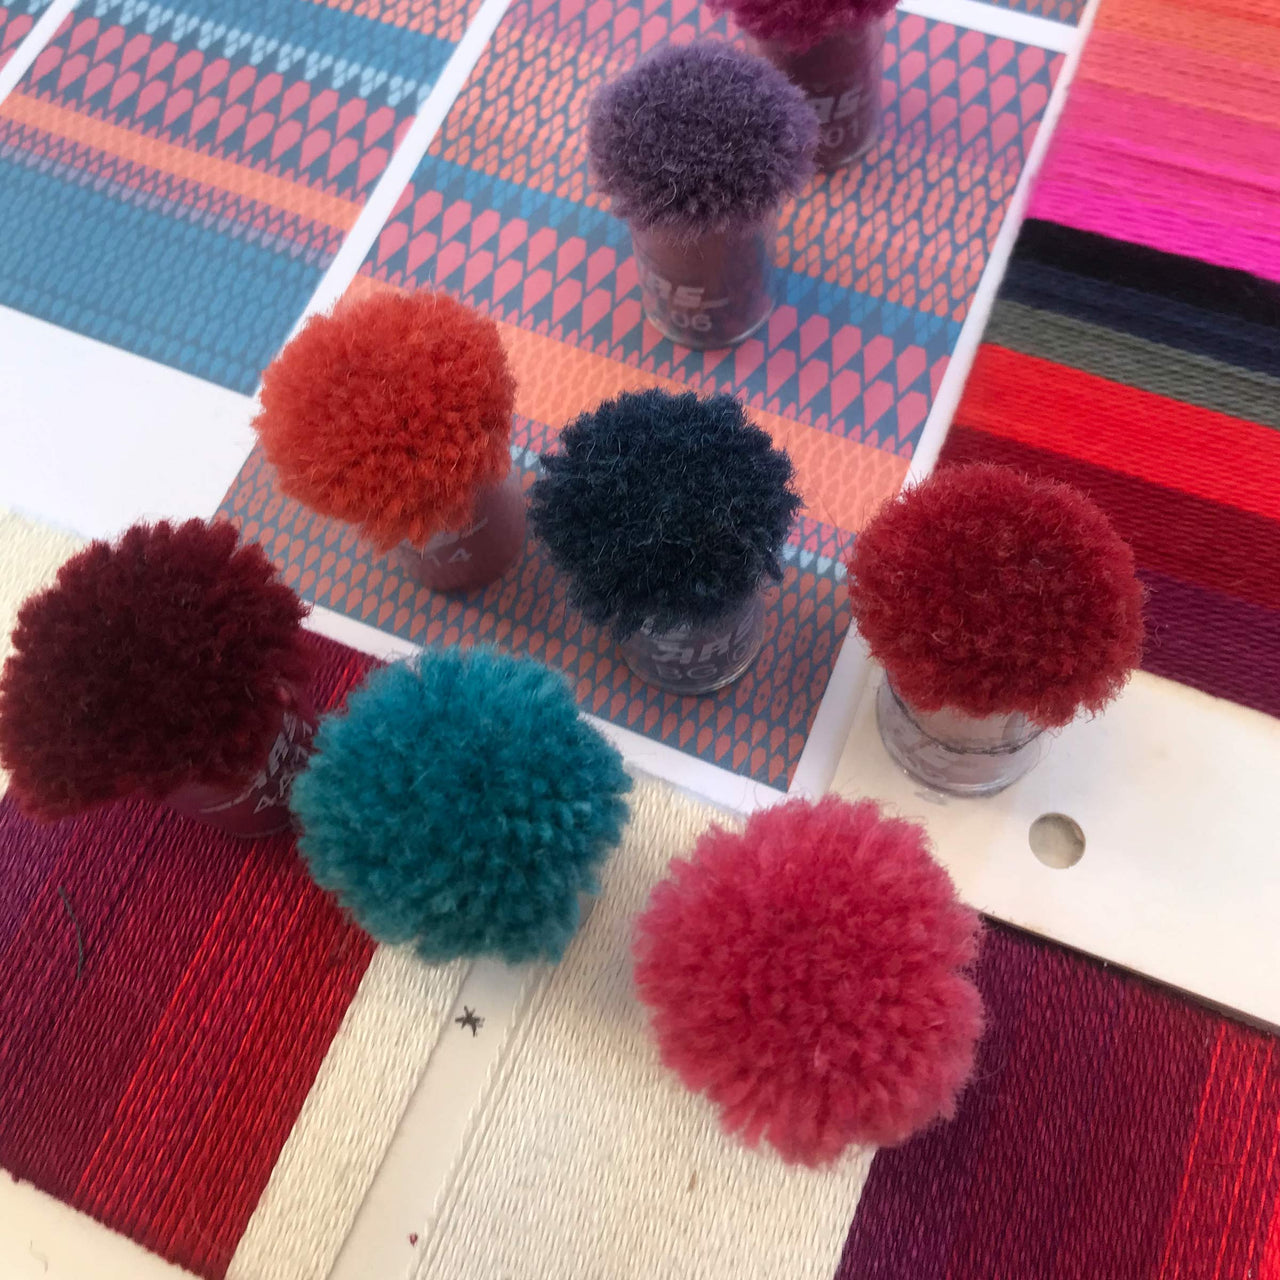 Geometric pattern, colourful rugs, designer rugs, luxury rugs, wool rugs, geometric rug, modern rug, red rug, pink rug